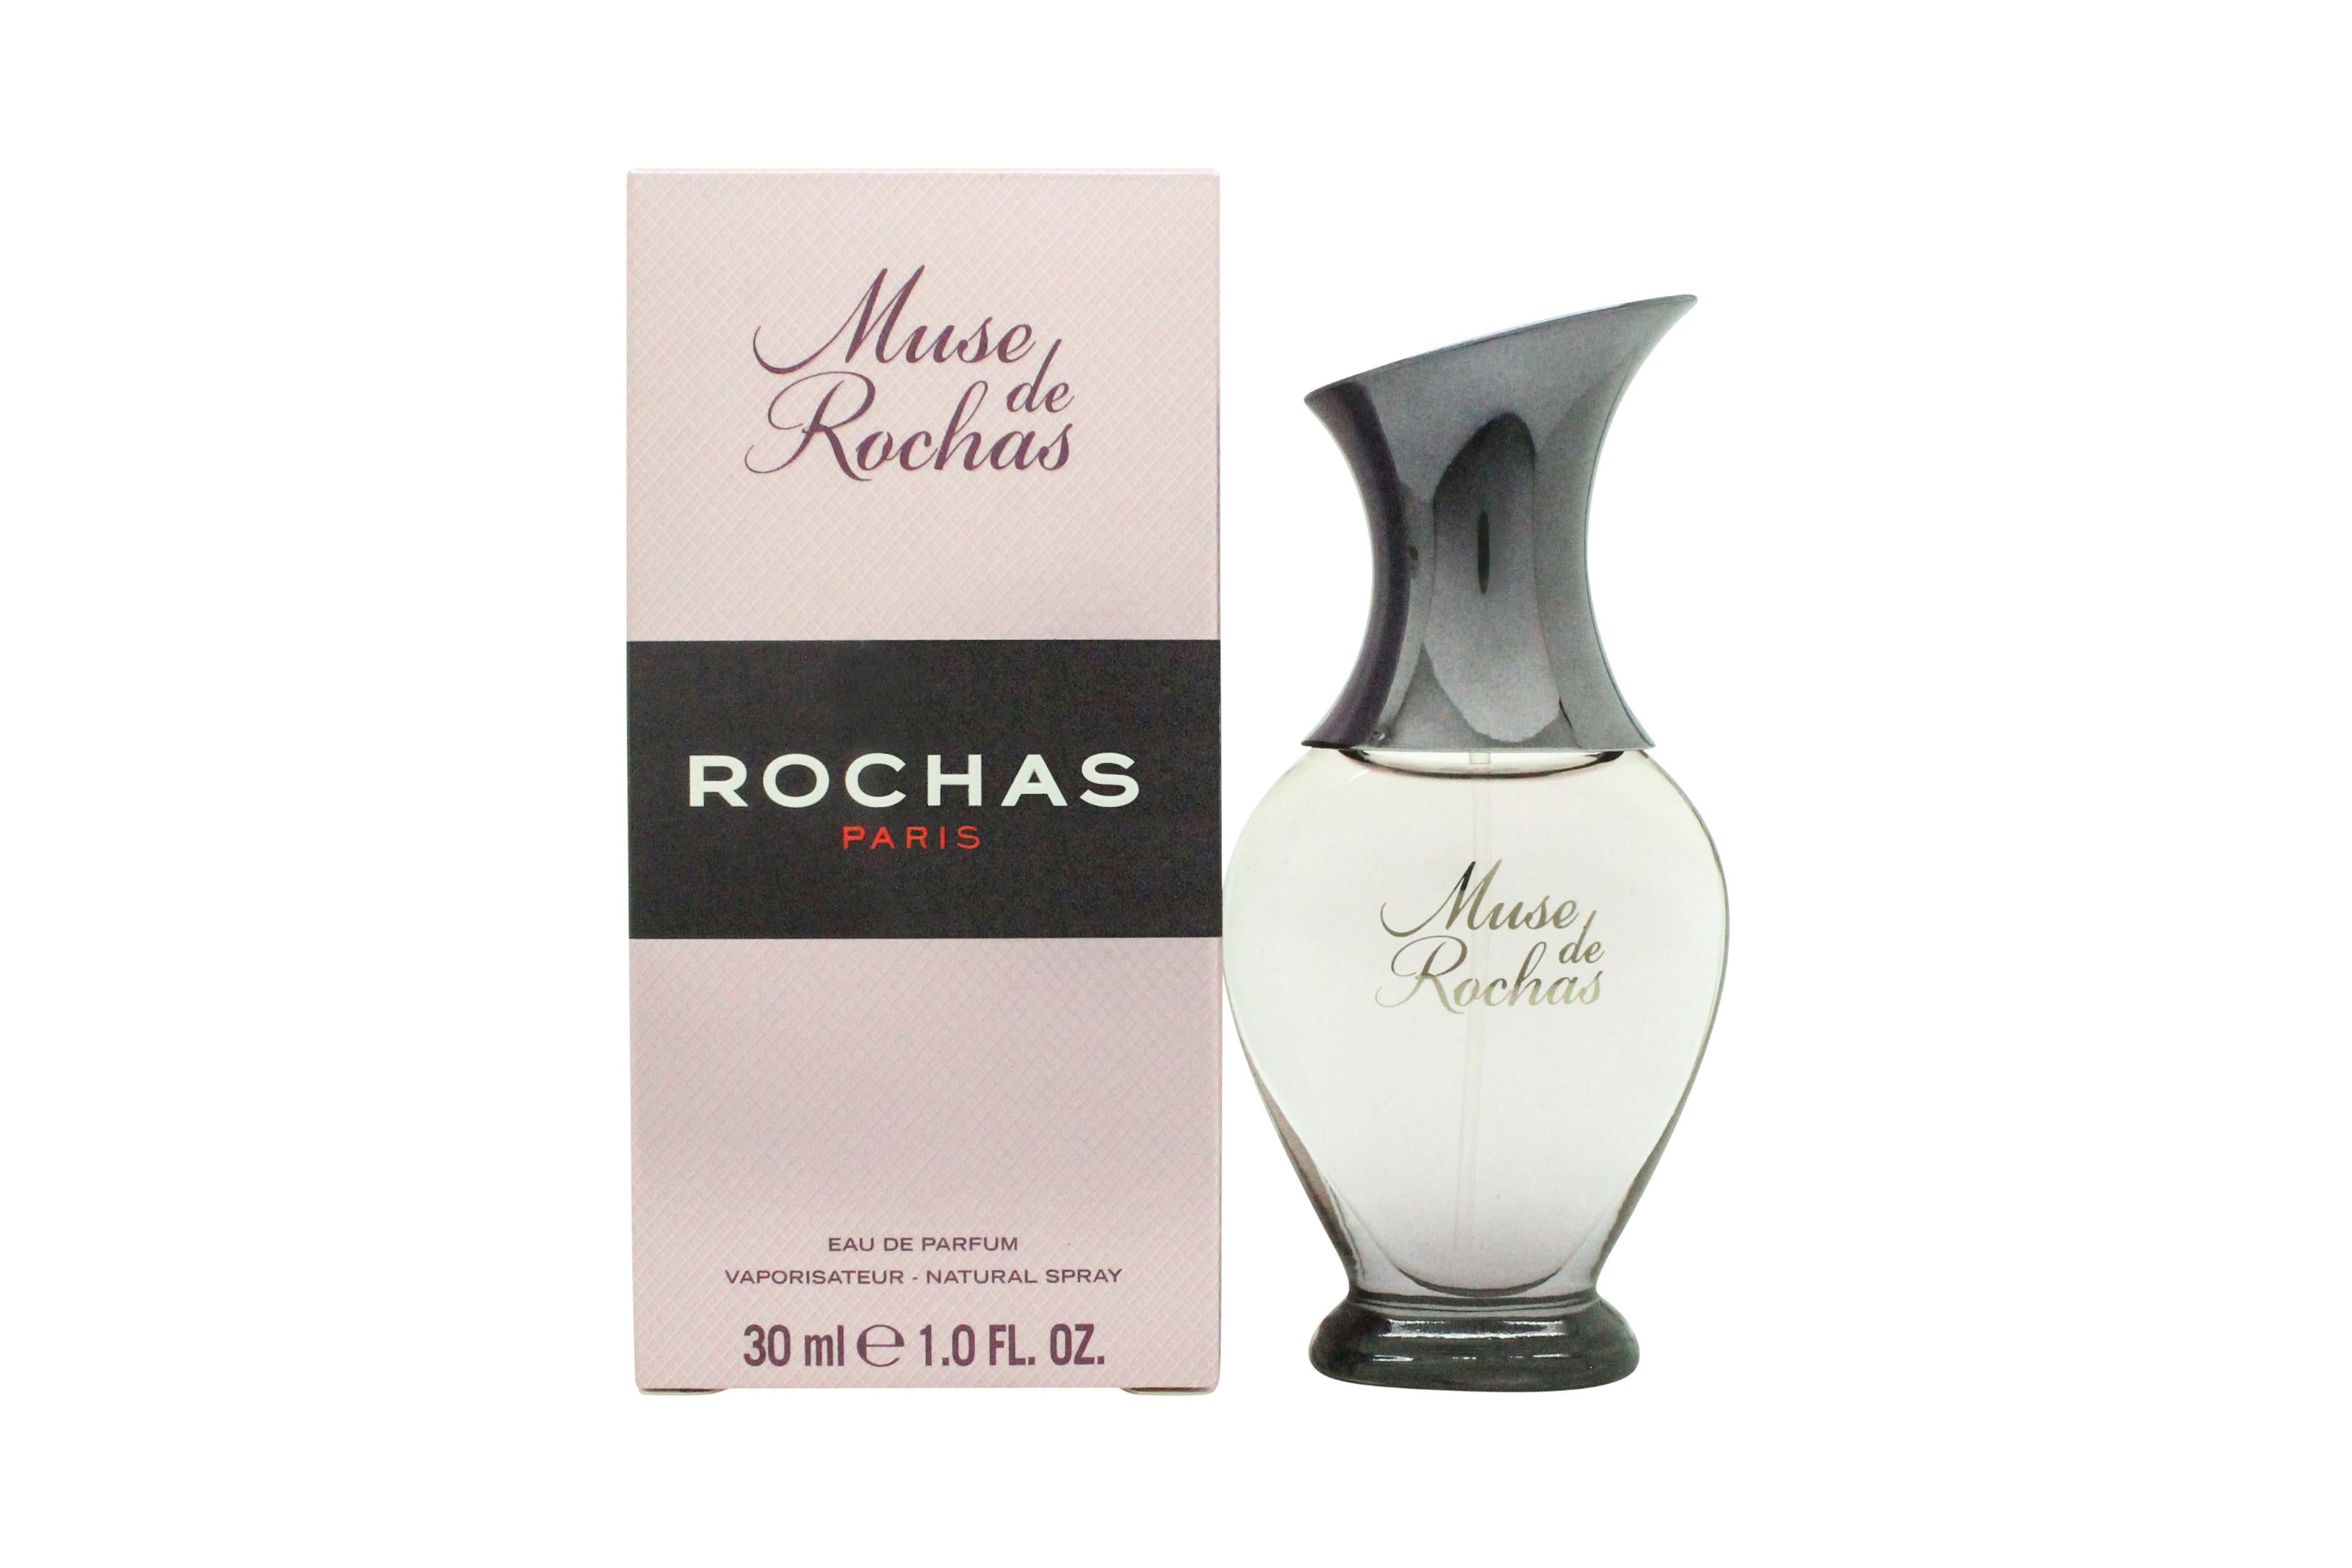 View Rochas Muse de Rochas Eau de Parfum 30ml Spray information